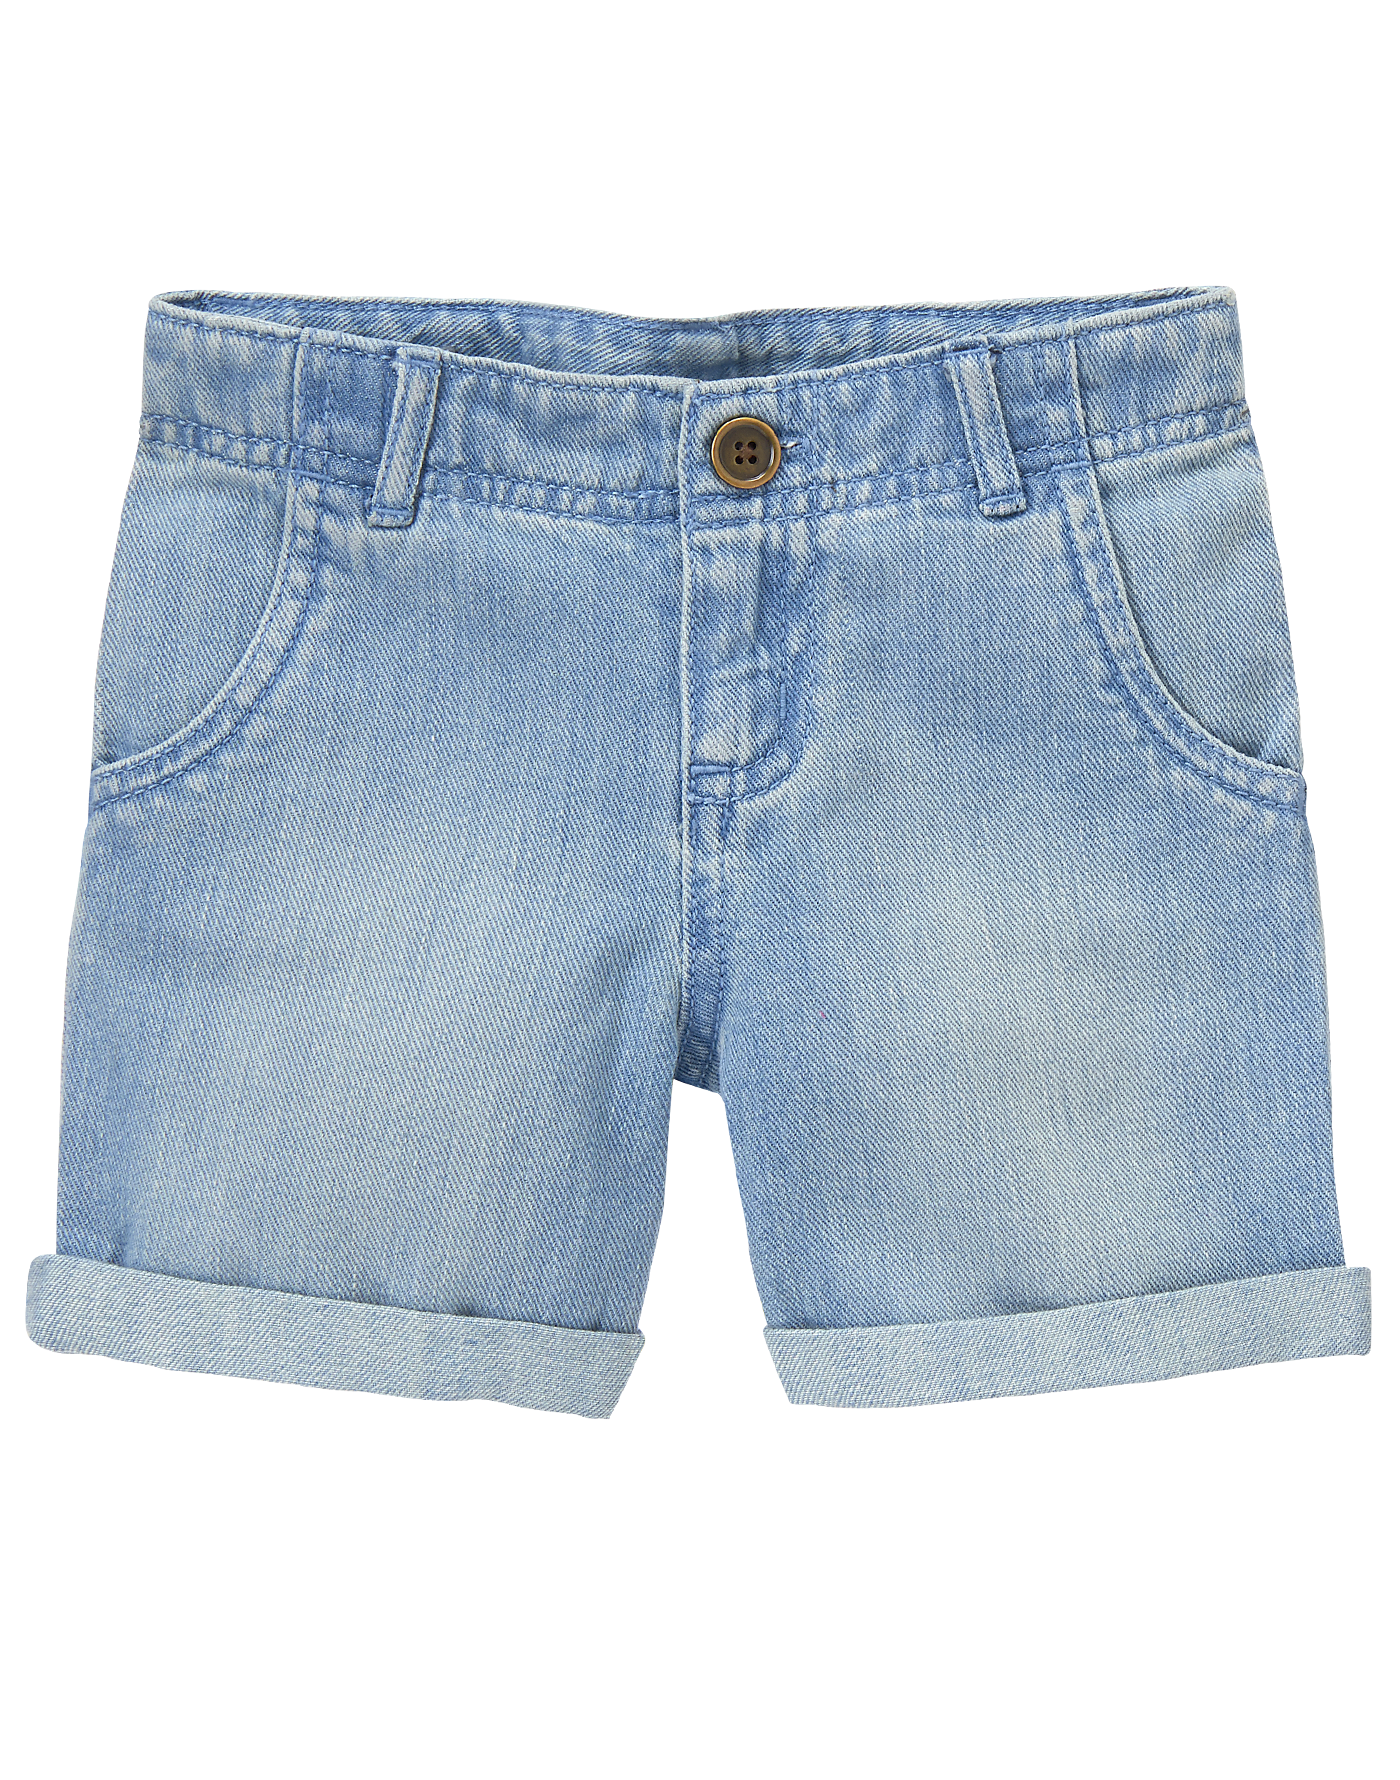 Blue Jean shorts transparent background 42490